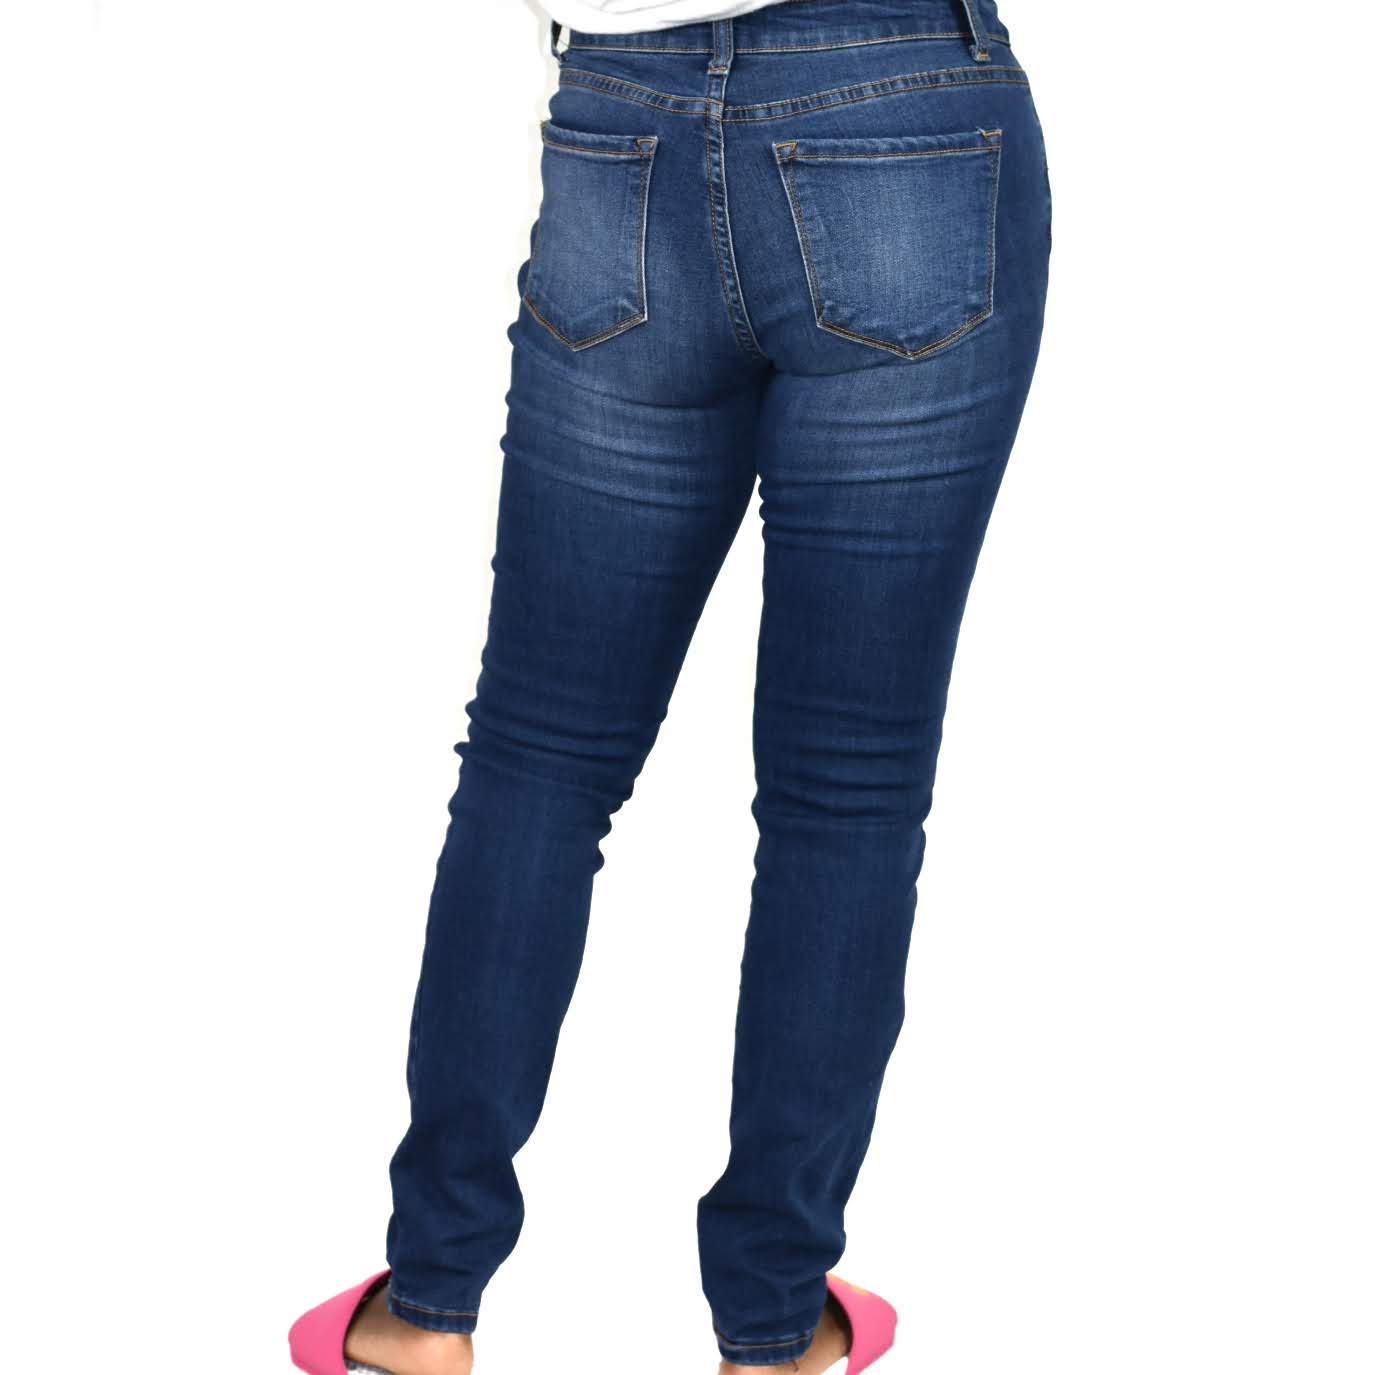 Kancan Skinny Jeans Size 27